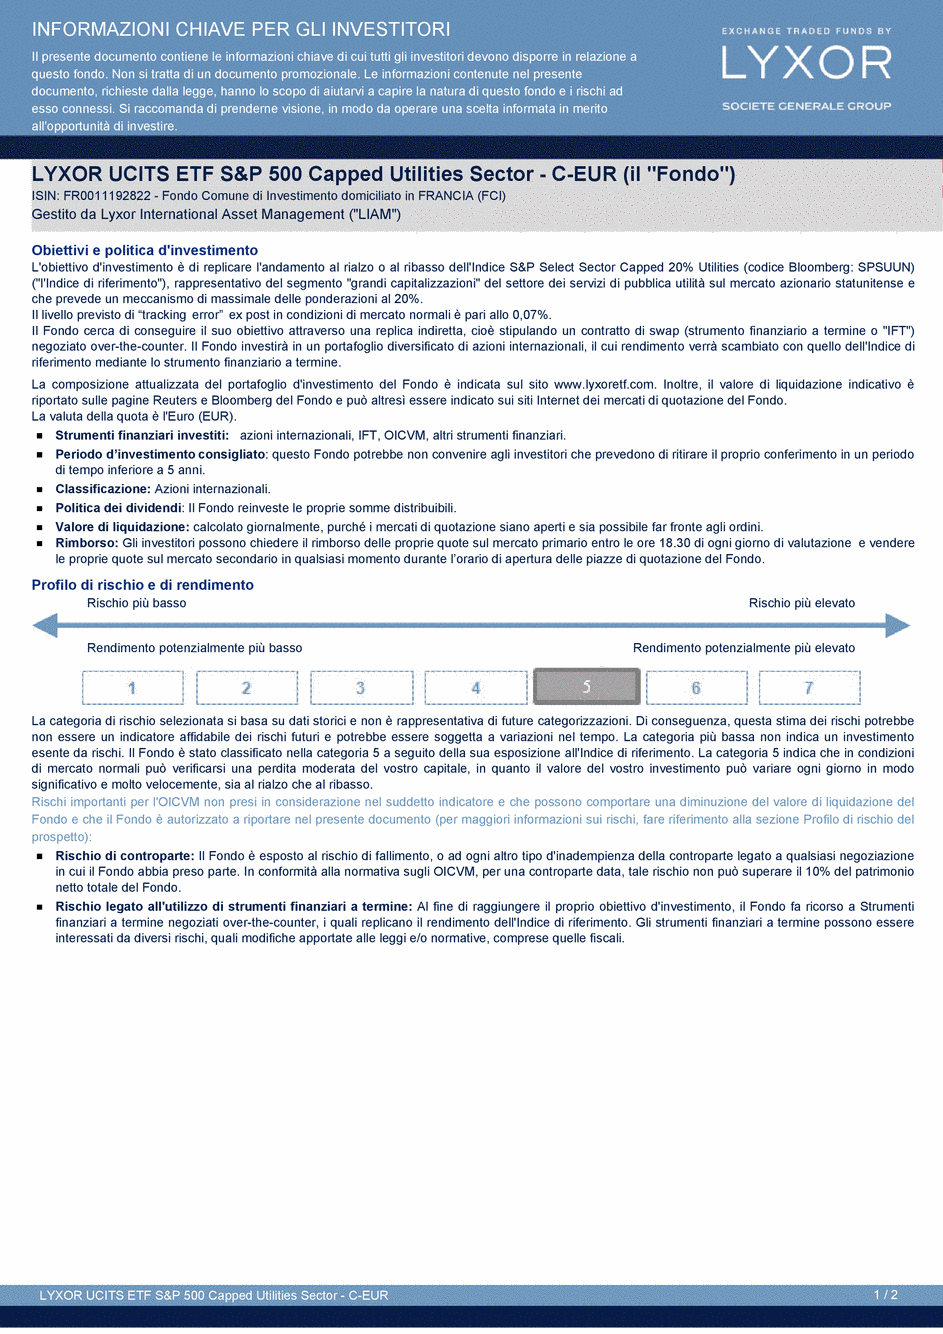 DICI LYXOR UCITS ETF S&P 500 CAPPED UTILITIES SECTOR PART C-USD - 15/09/2014 - Italien